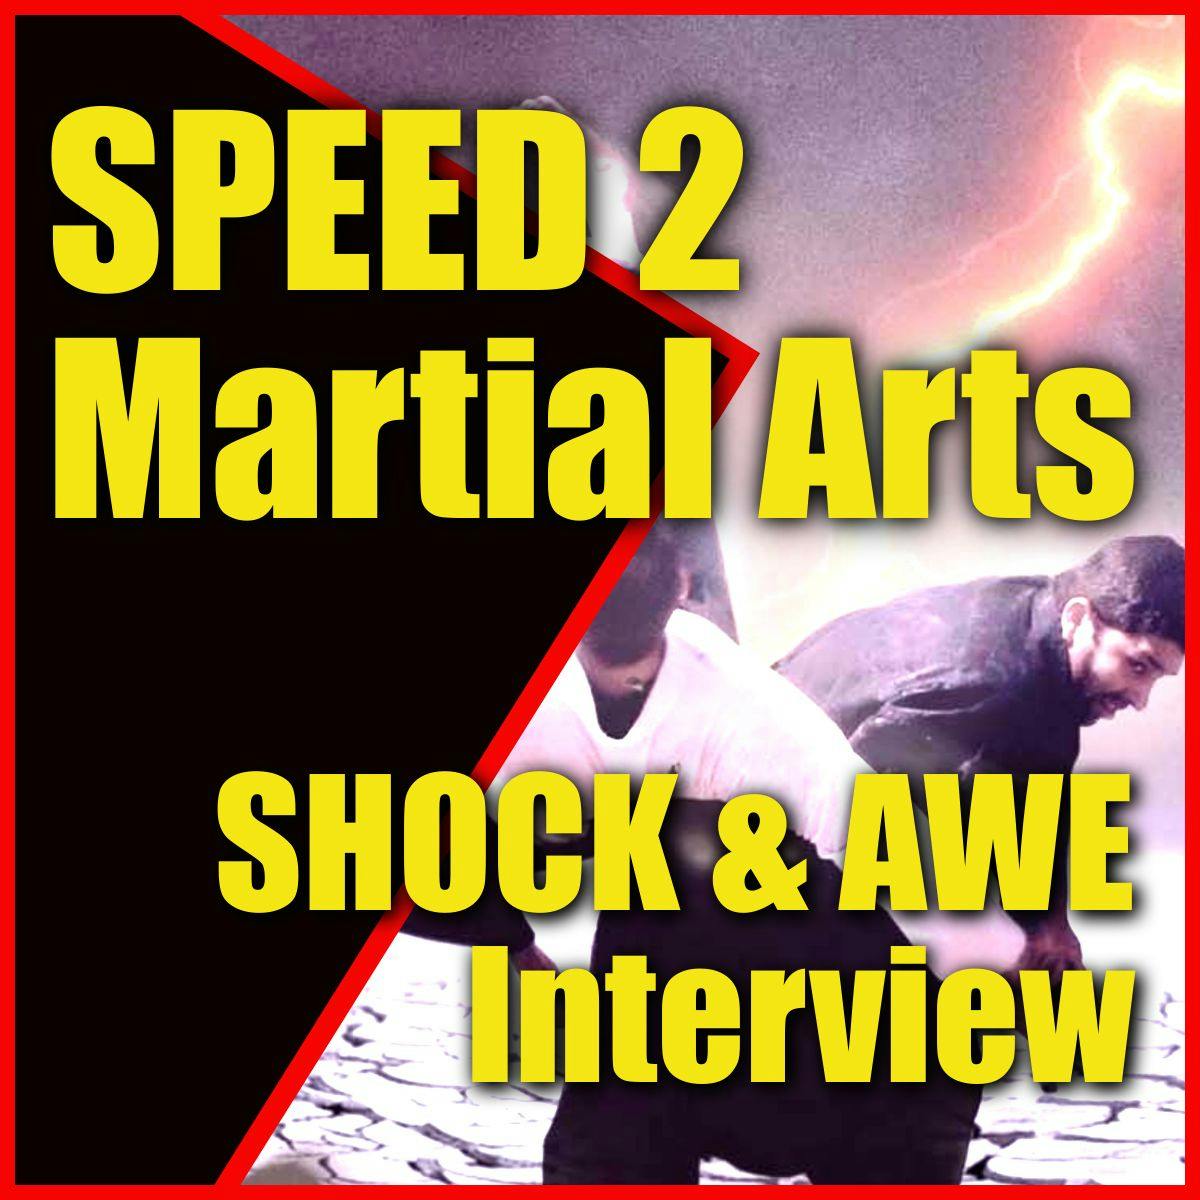 SPEED 2 Martial Arts Shock & Awe Symposium Interview